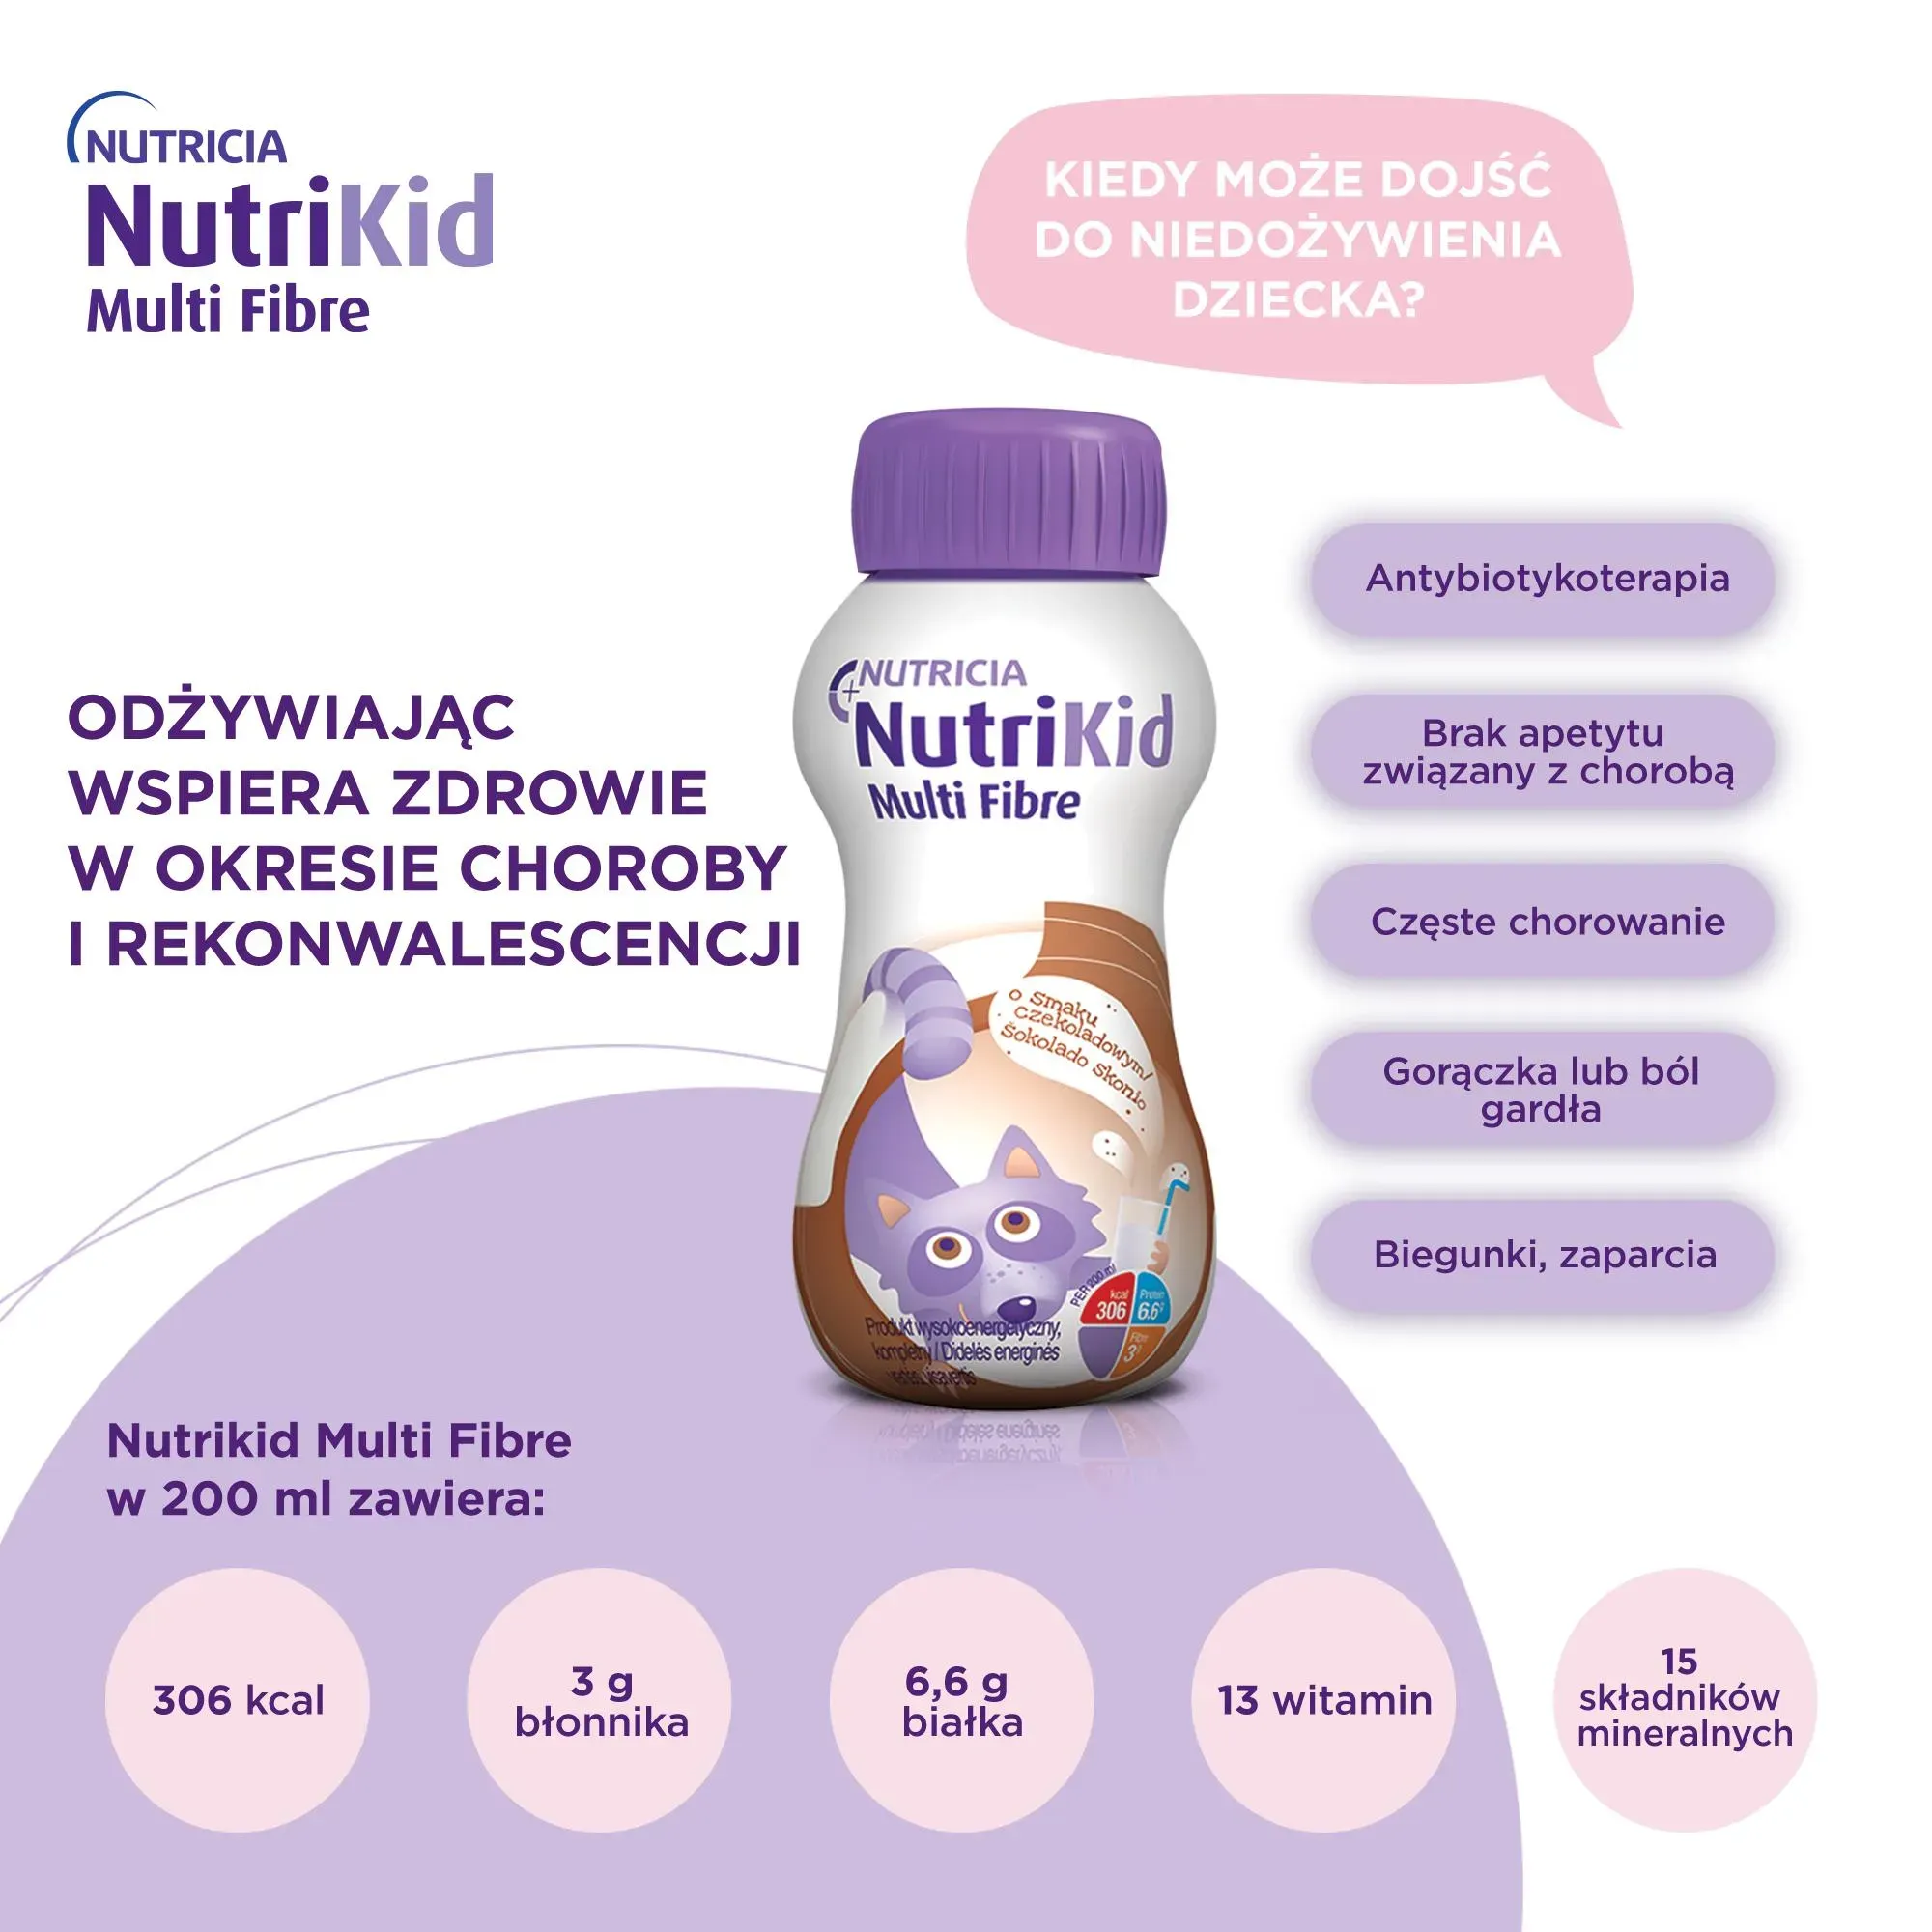 NutriKid Multi Fibre, smak czekoladowy, 200 ml 